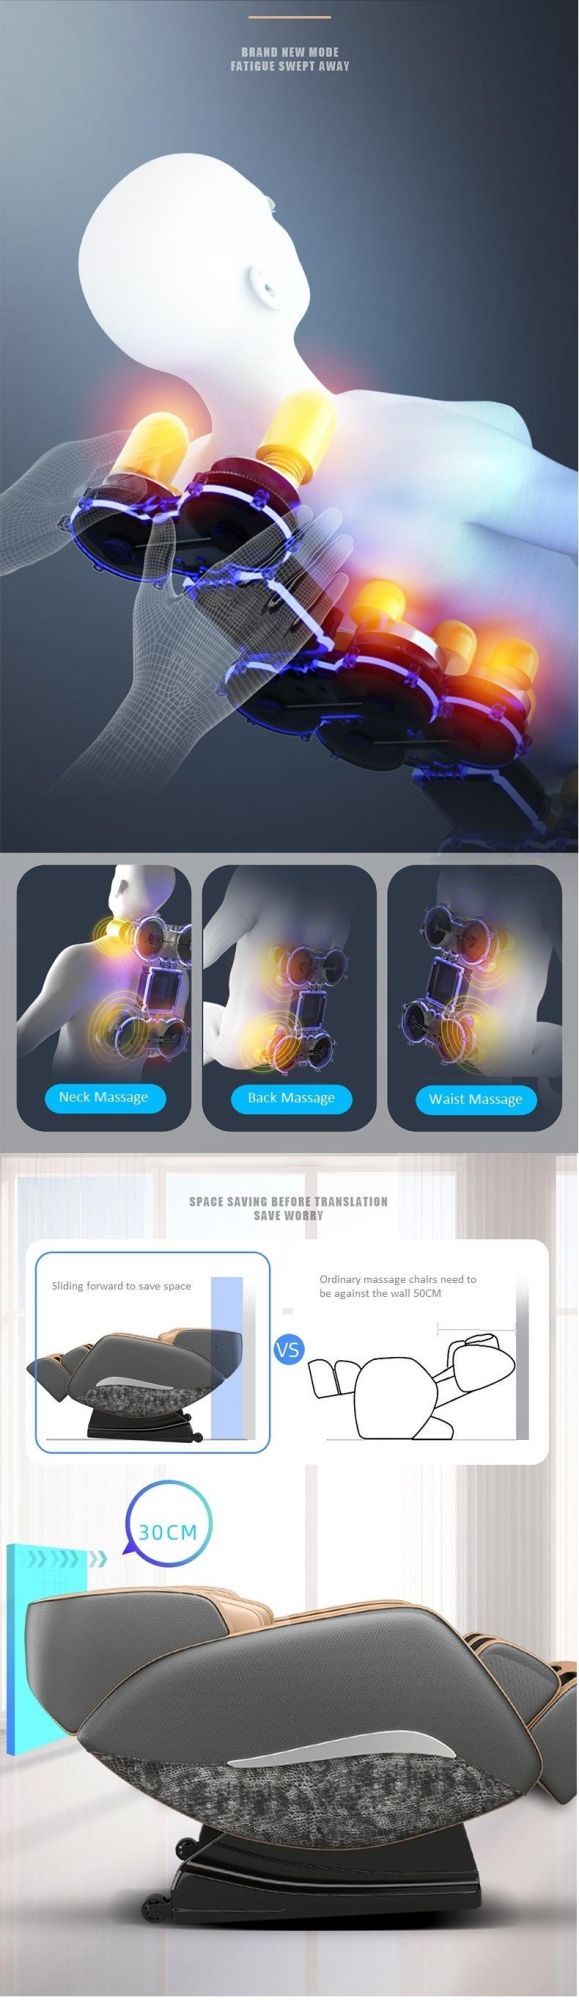 New Luxury Design Full Body Massager Voice Control LED Light Massage Chair